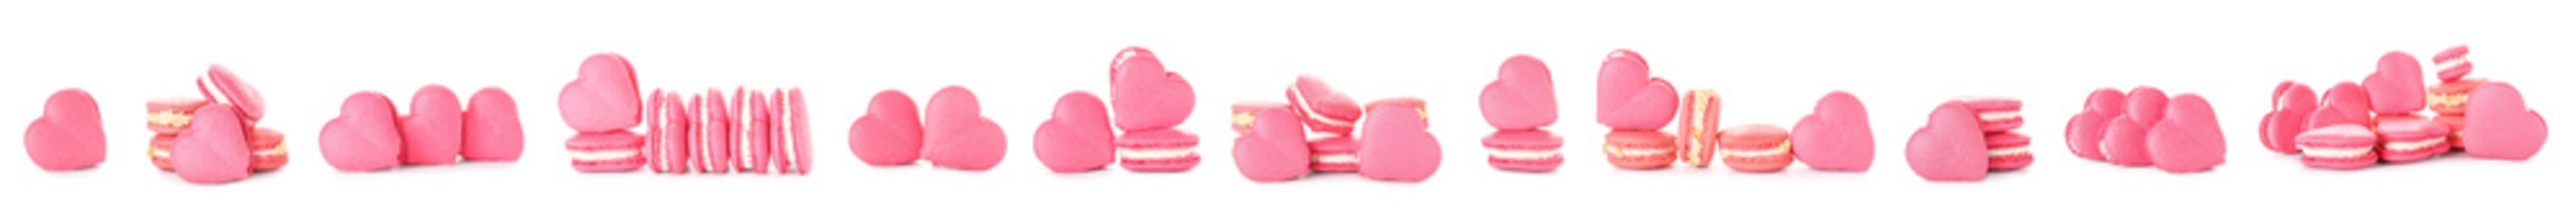 Set of many sweet heart-shaped macarons isolated on white